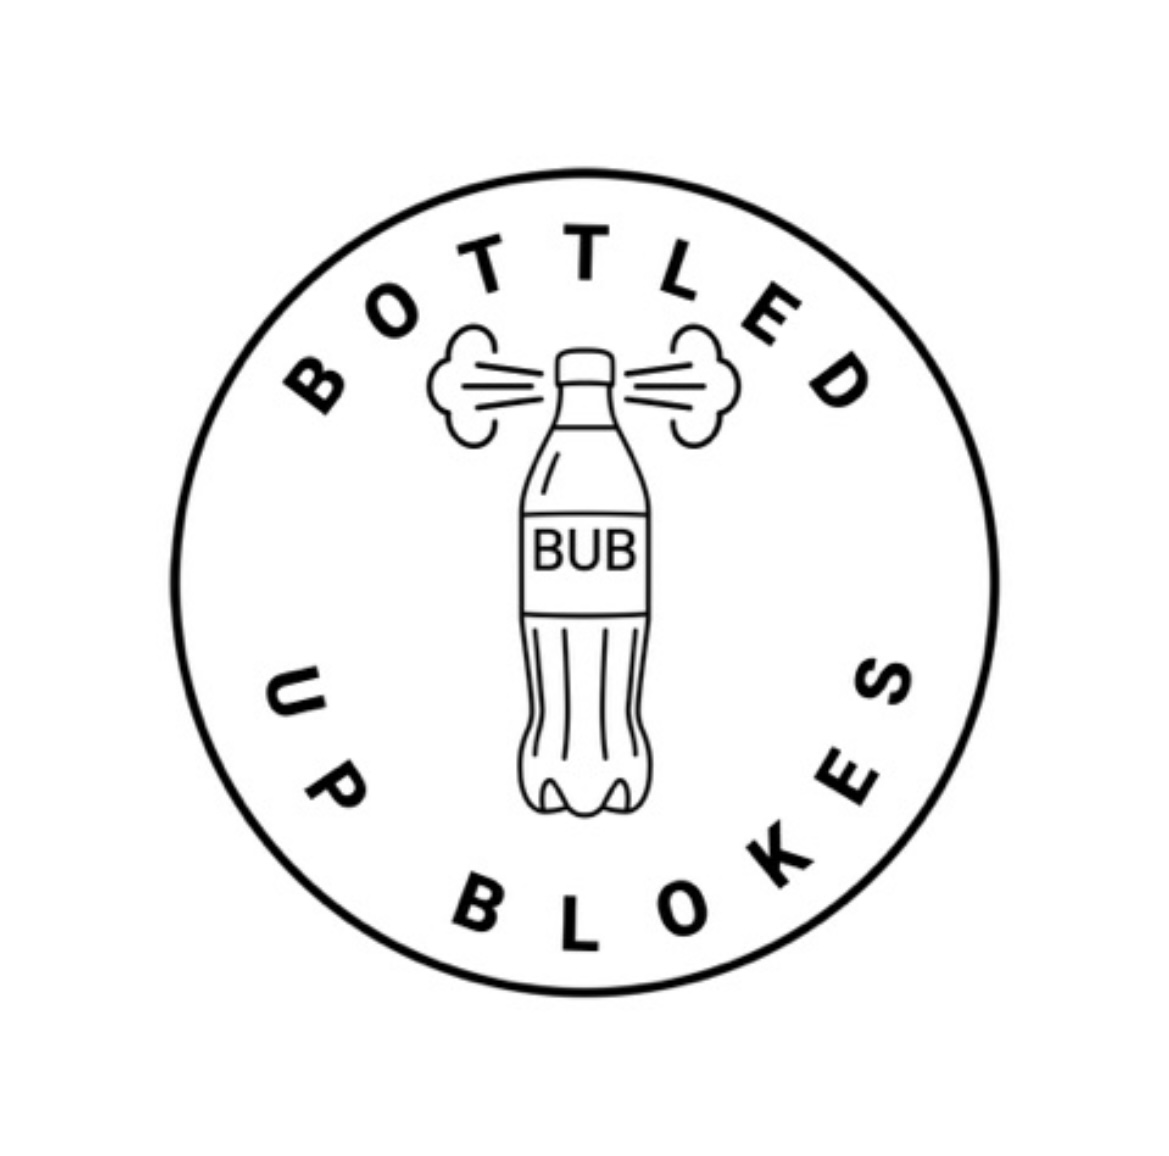 Bottled Up Blokes offer mental health support for men